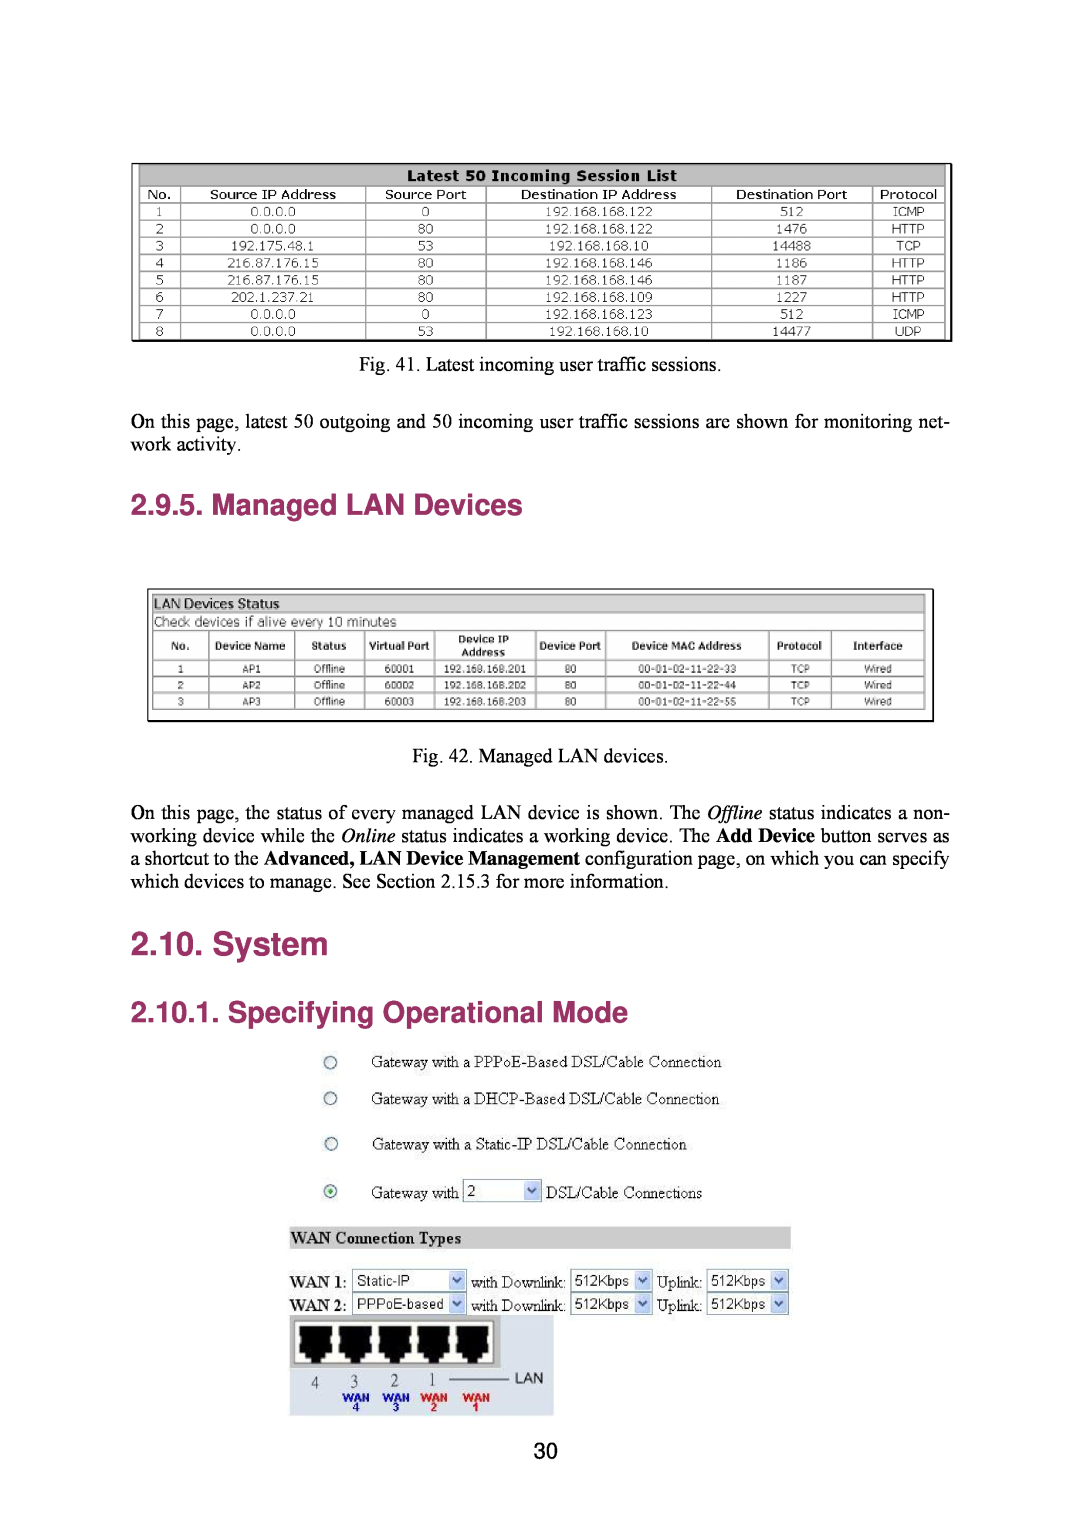 Epson IWE3200-H manual System, Managed LAN Devices, Specifying Operational Mode 